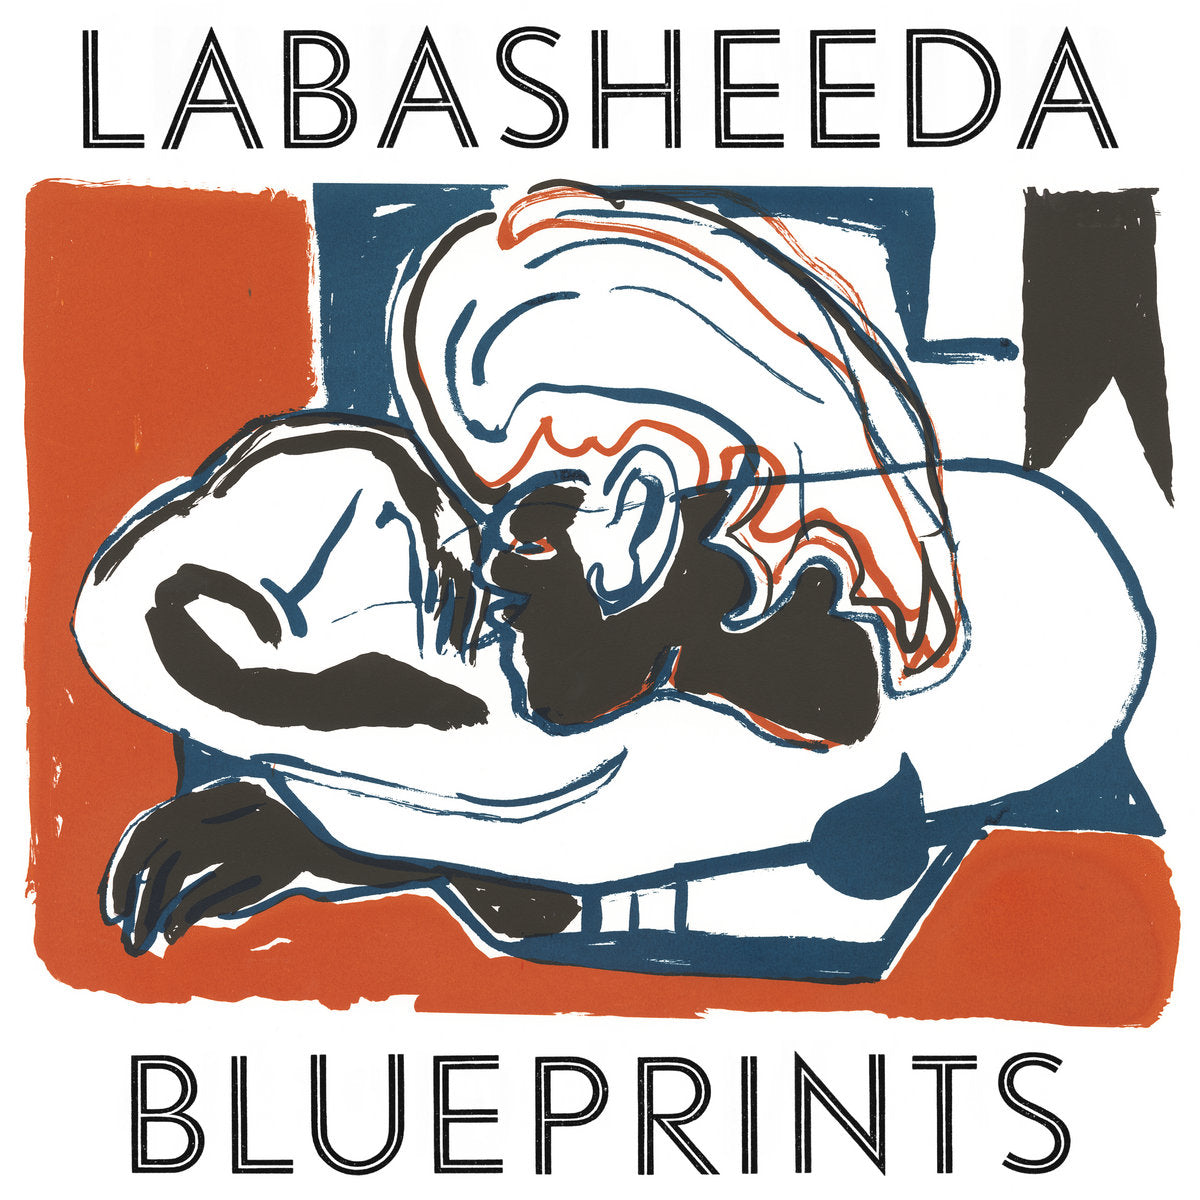 Dutch trio Labasheeda continue to impress with sixth album ‘Blueprints’